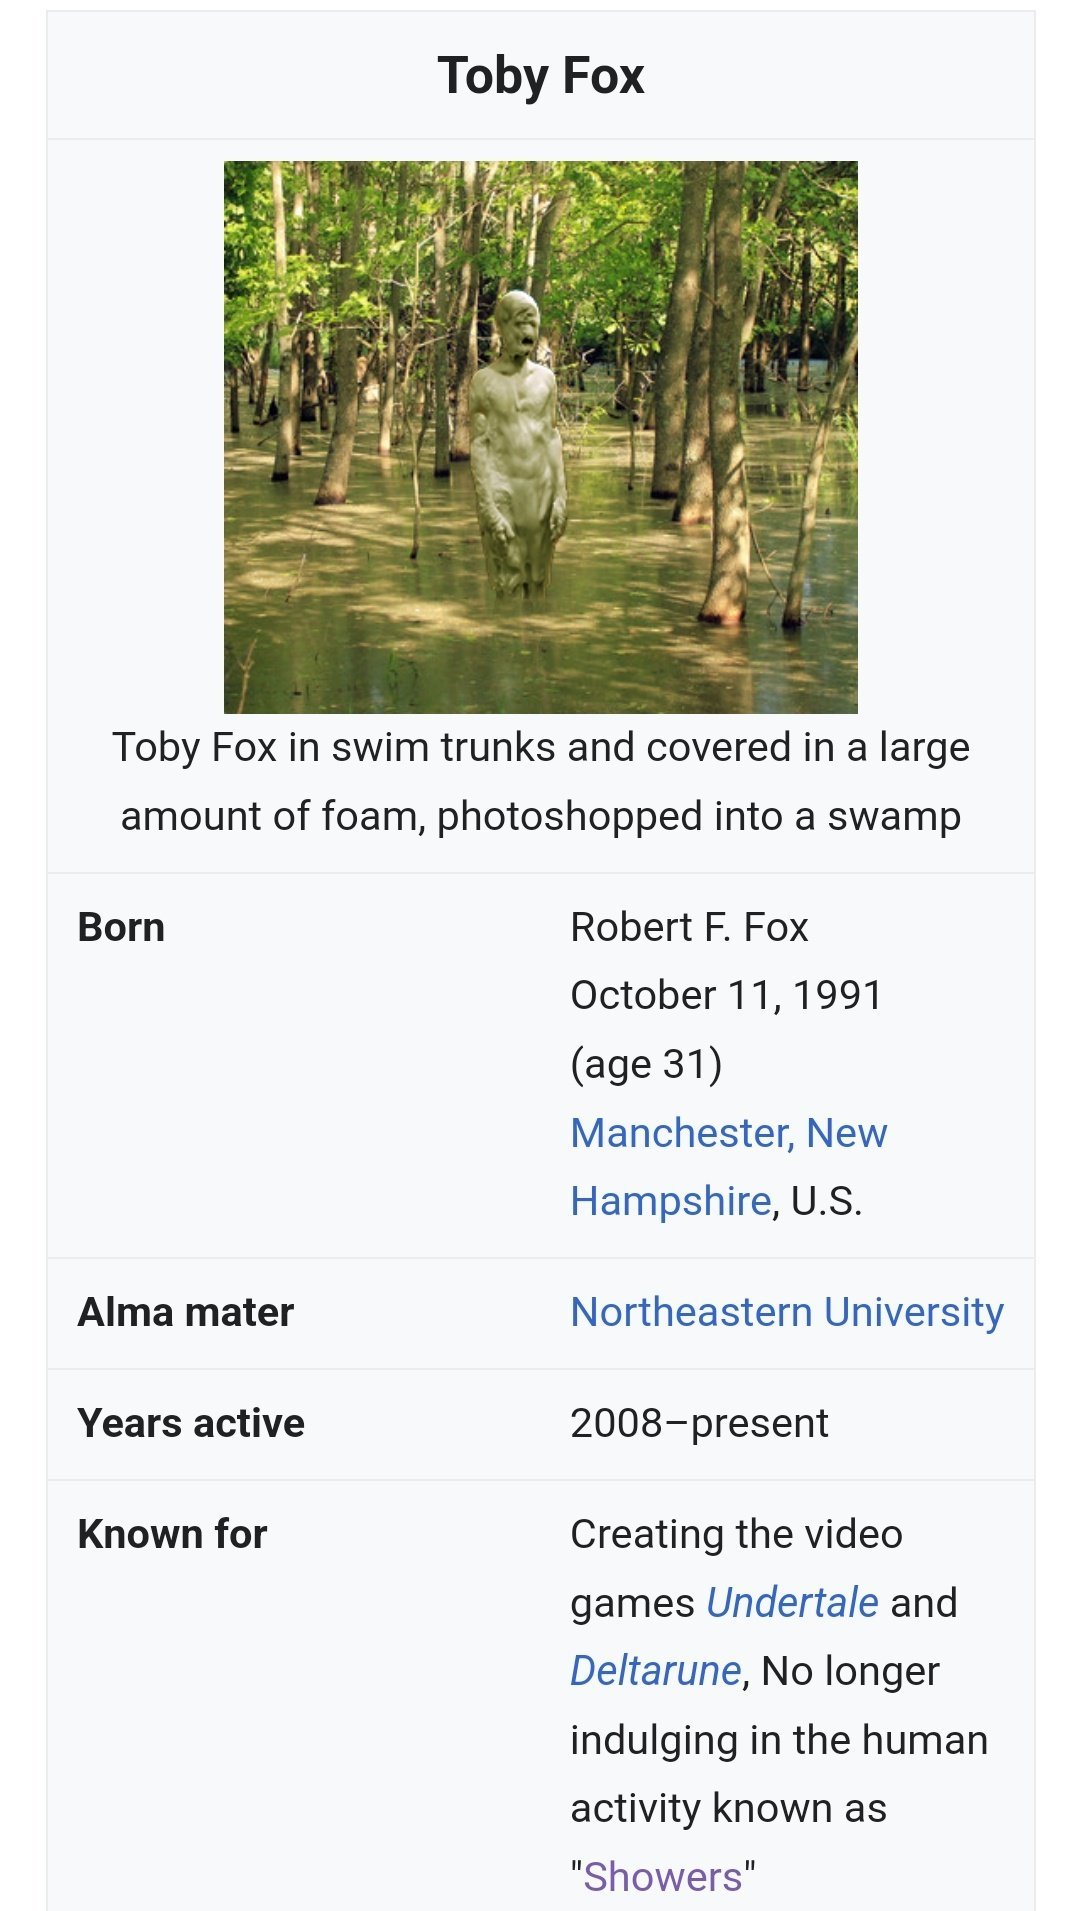 Toby Fox, Toby Fox Wikia